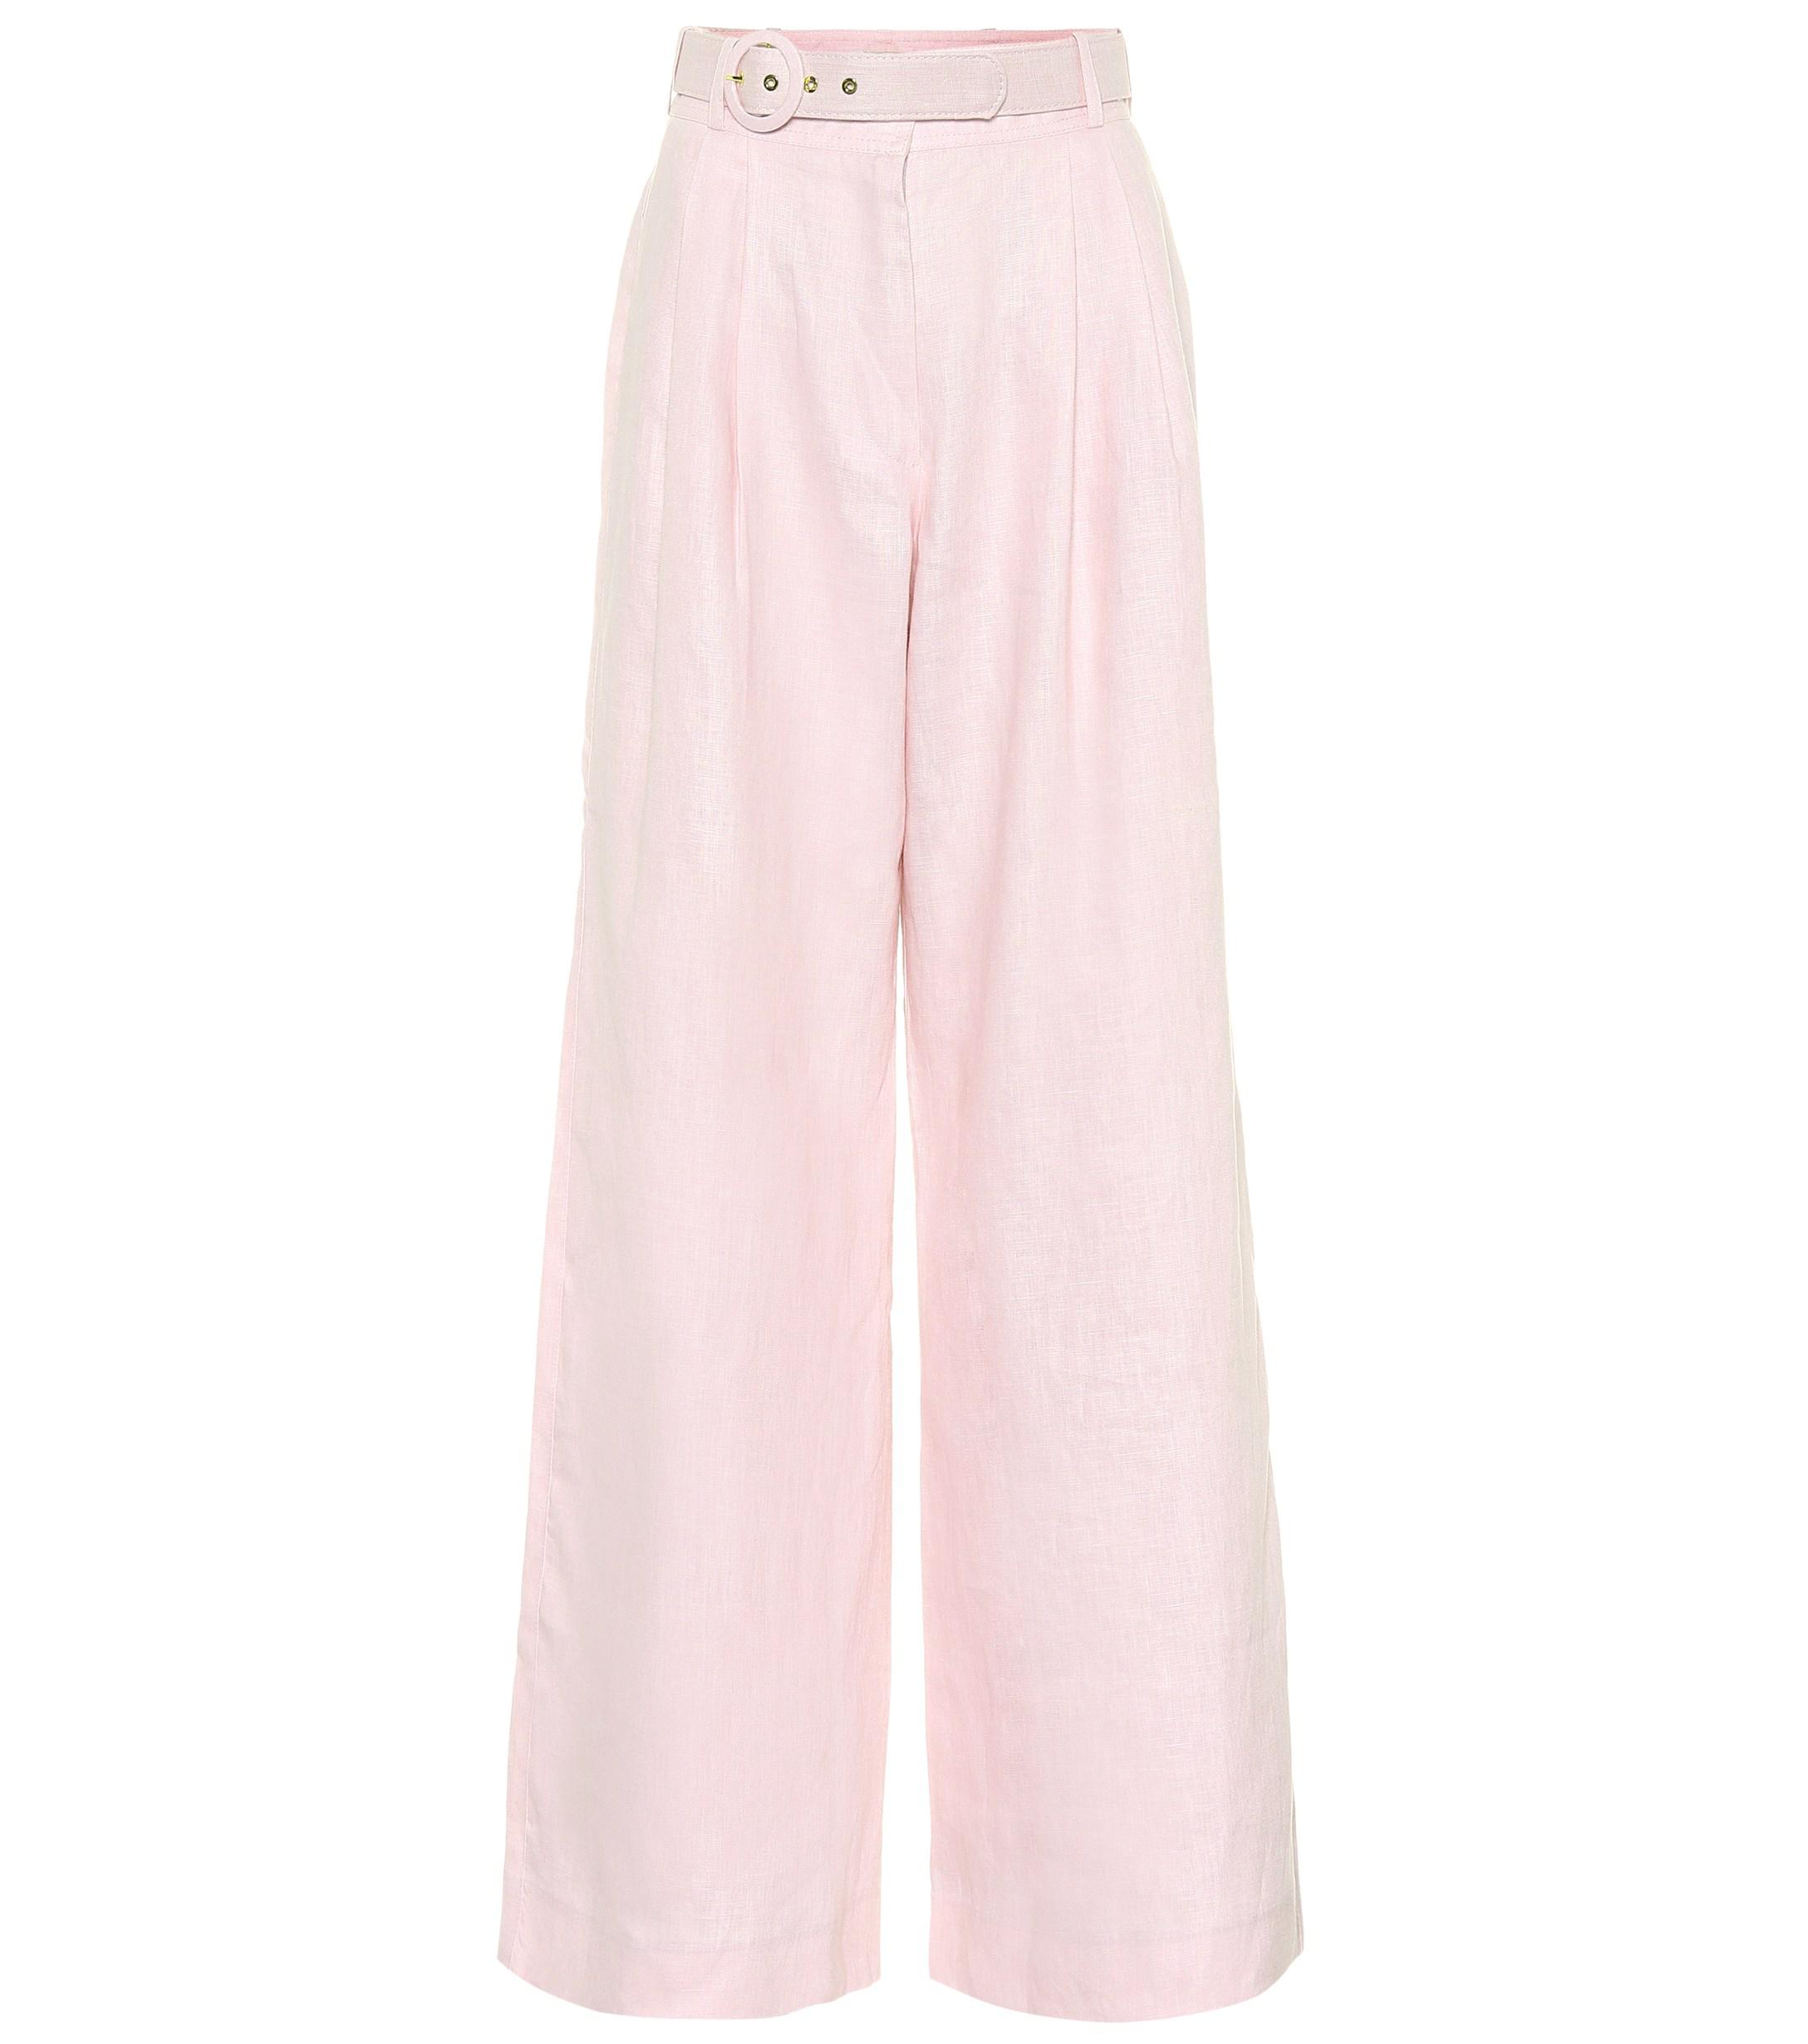 Zimmermann Corsage Linen Pants in Pink - Lyst